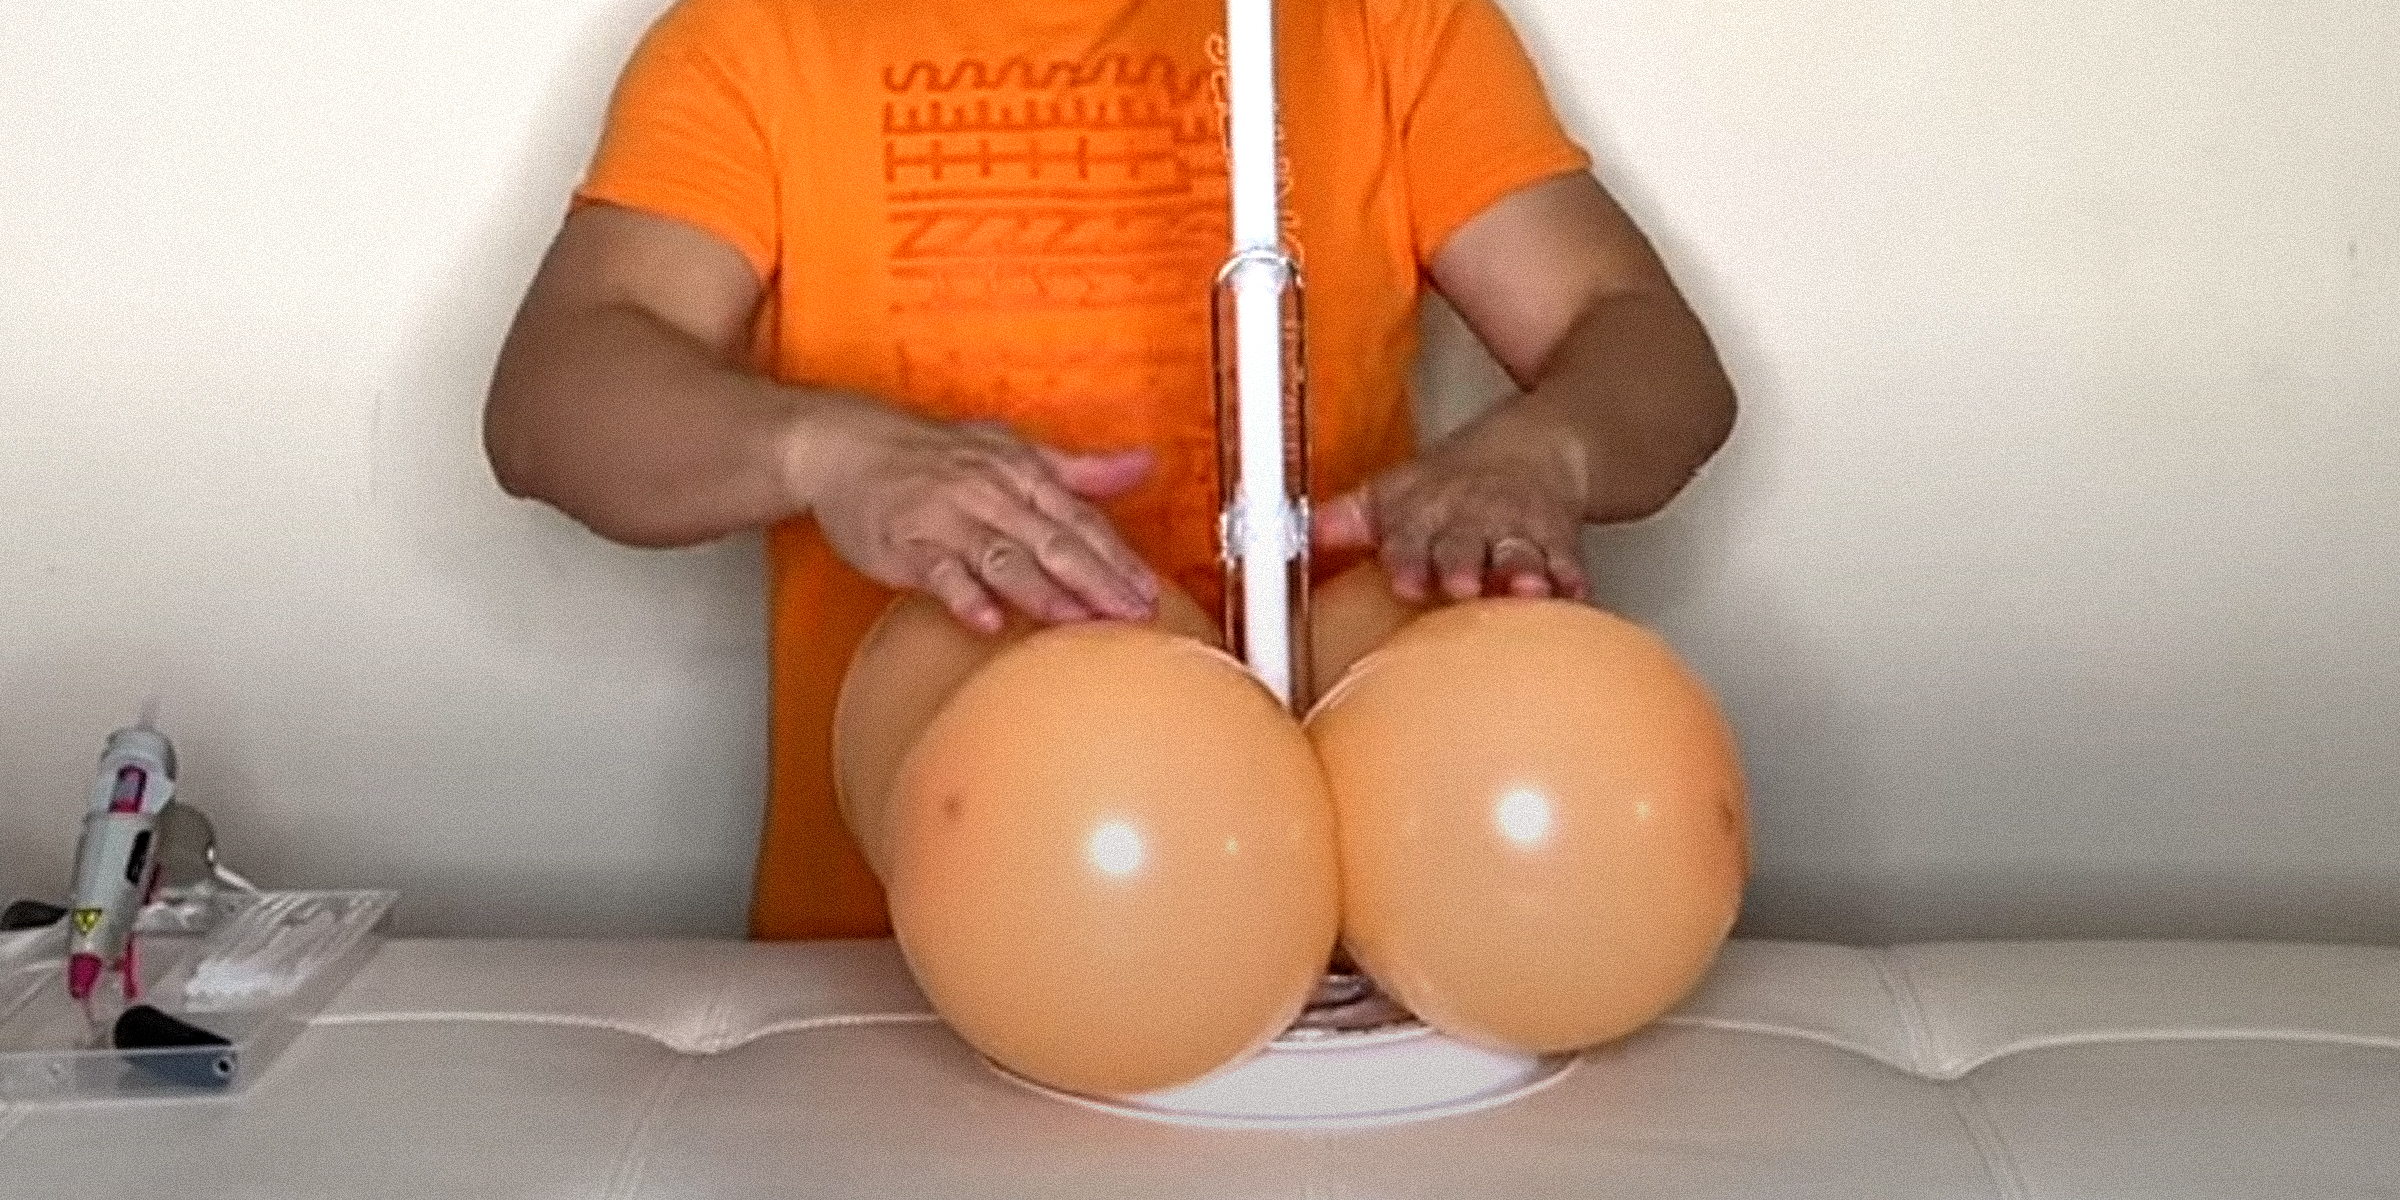 A person crafting a DIY balloon column stand | Source: YouTube/fambamny/videos